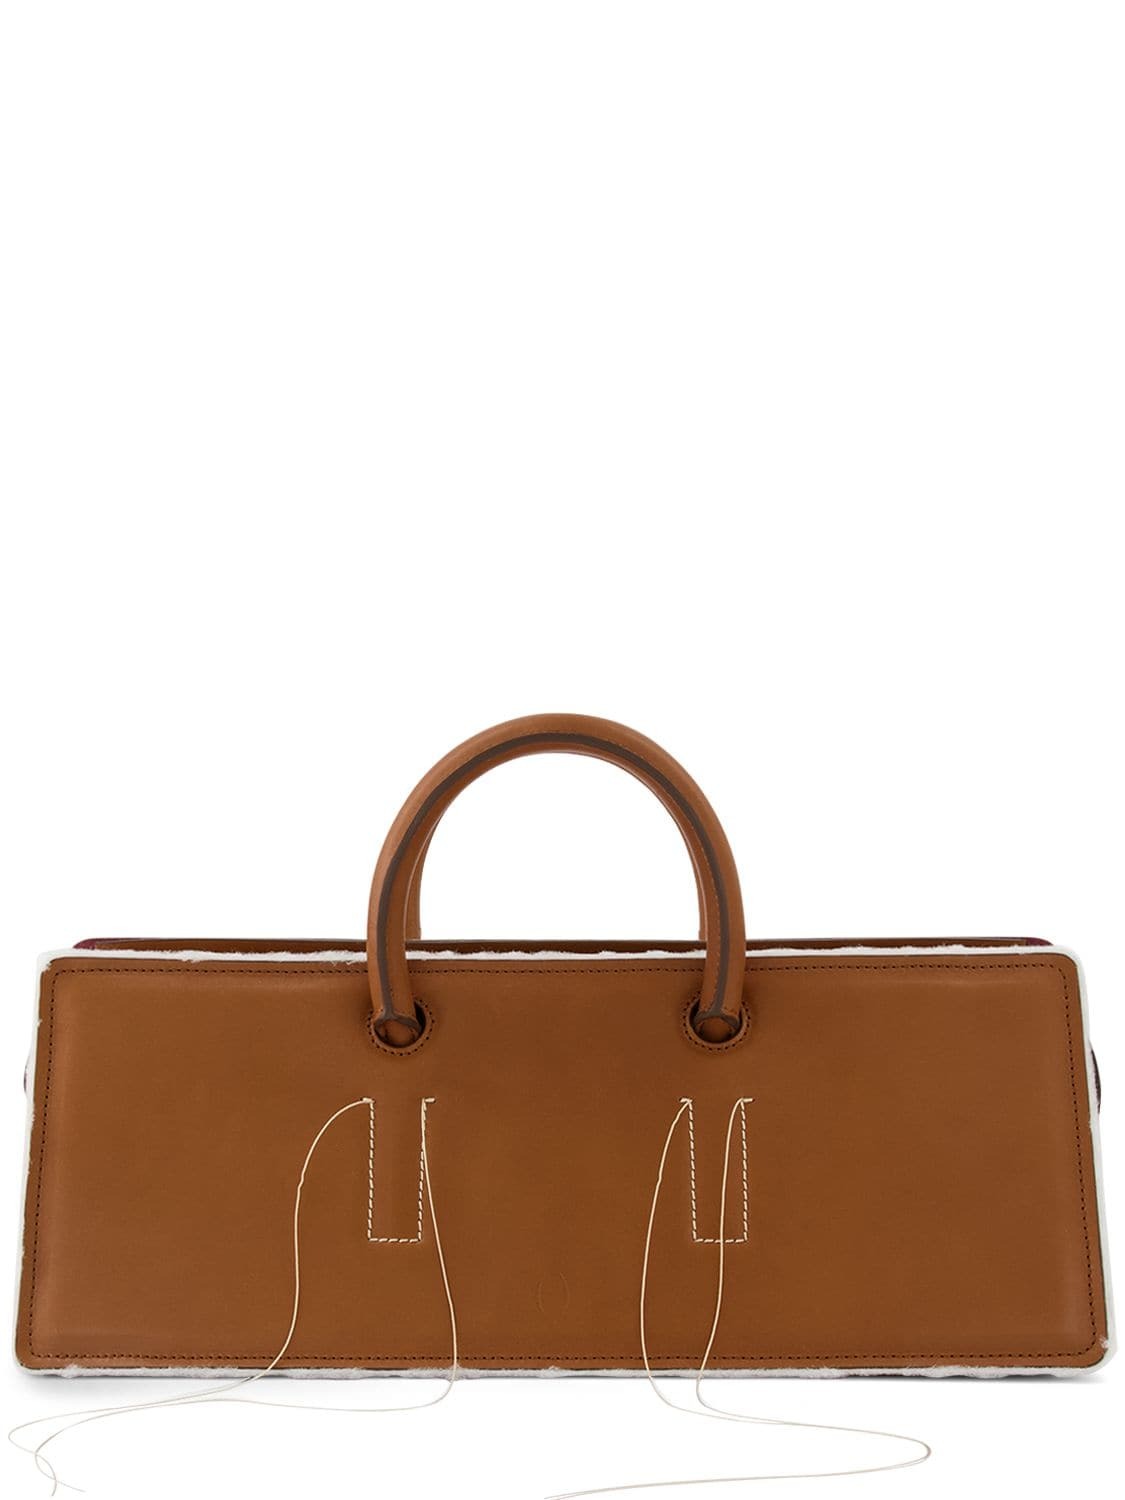 DENTRO Otto Top Handle Bag in brown